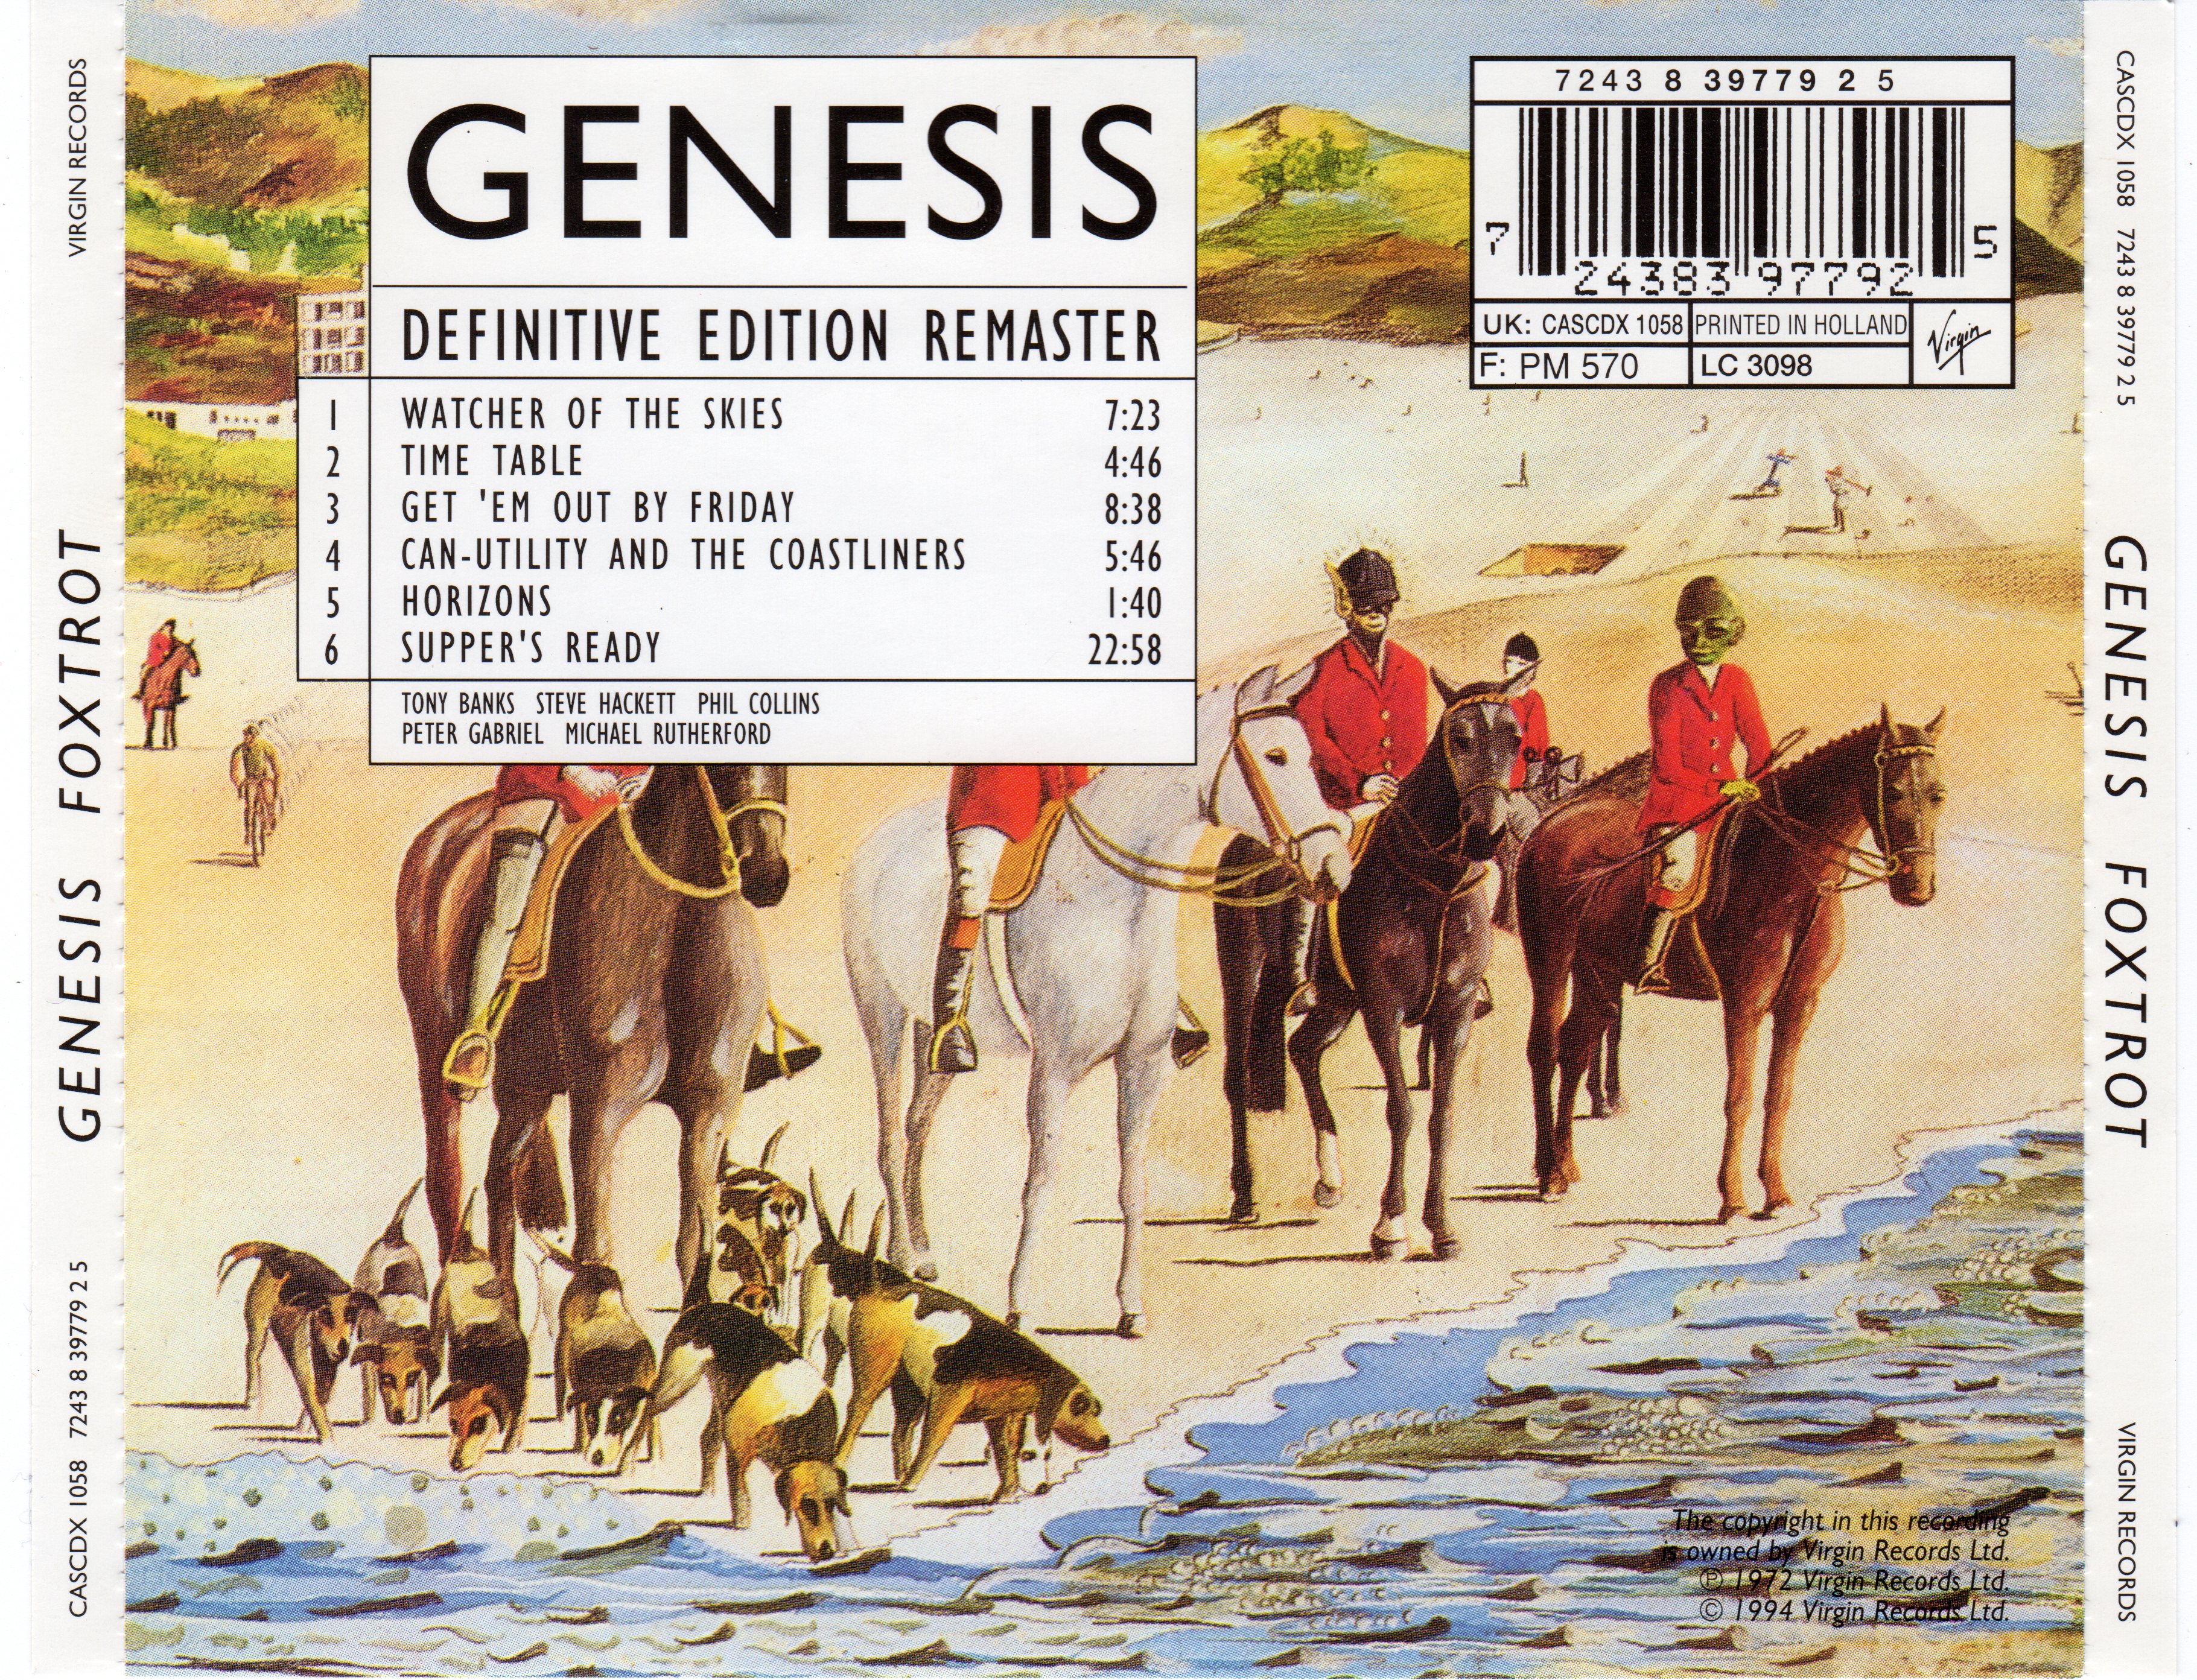 genesis foxtrot album cover